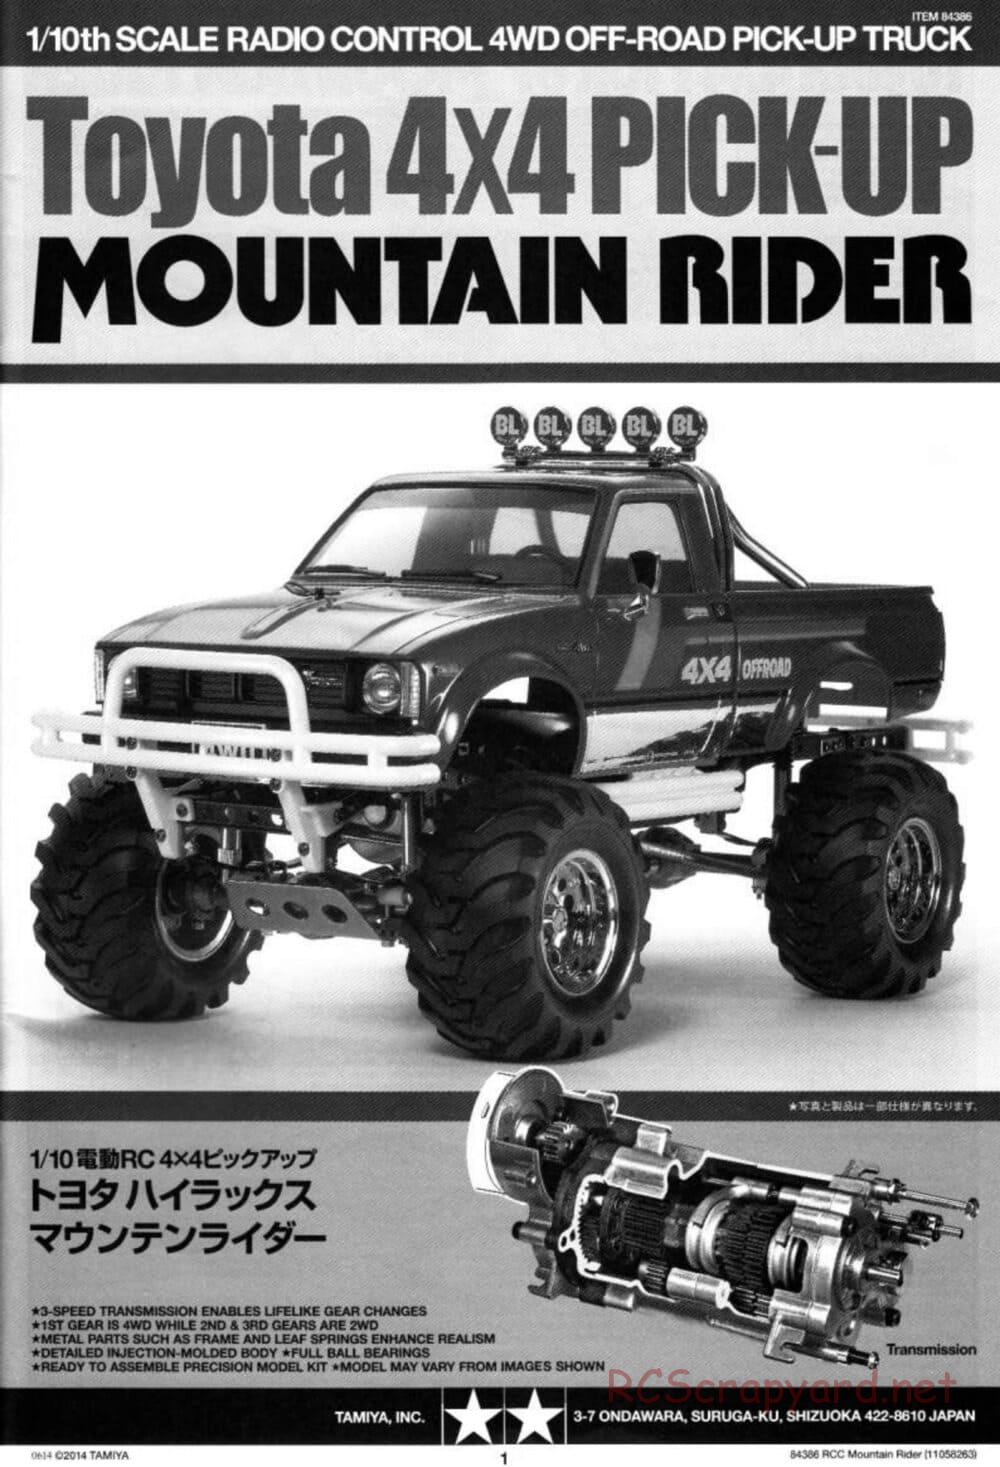 Tamiya - Toyota 4x4 Pick-Up Mountain Rider Chassis - Manual - Page 1